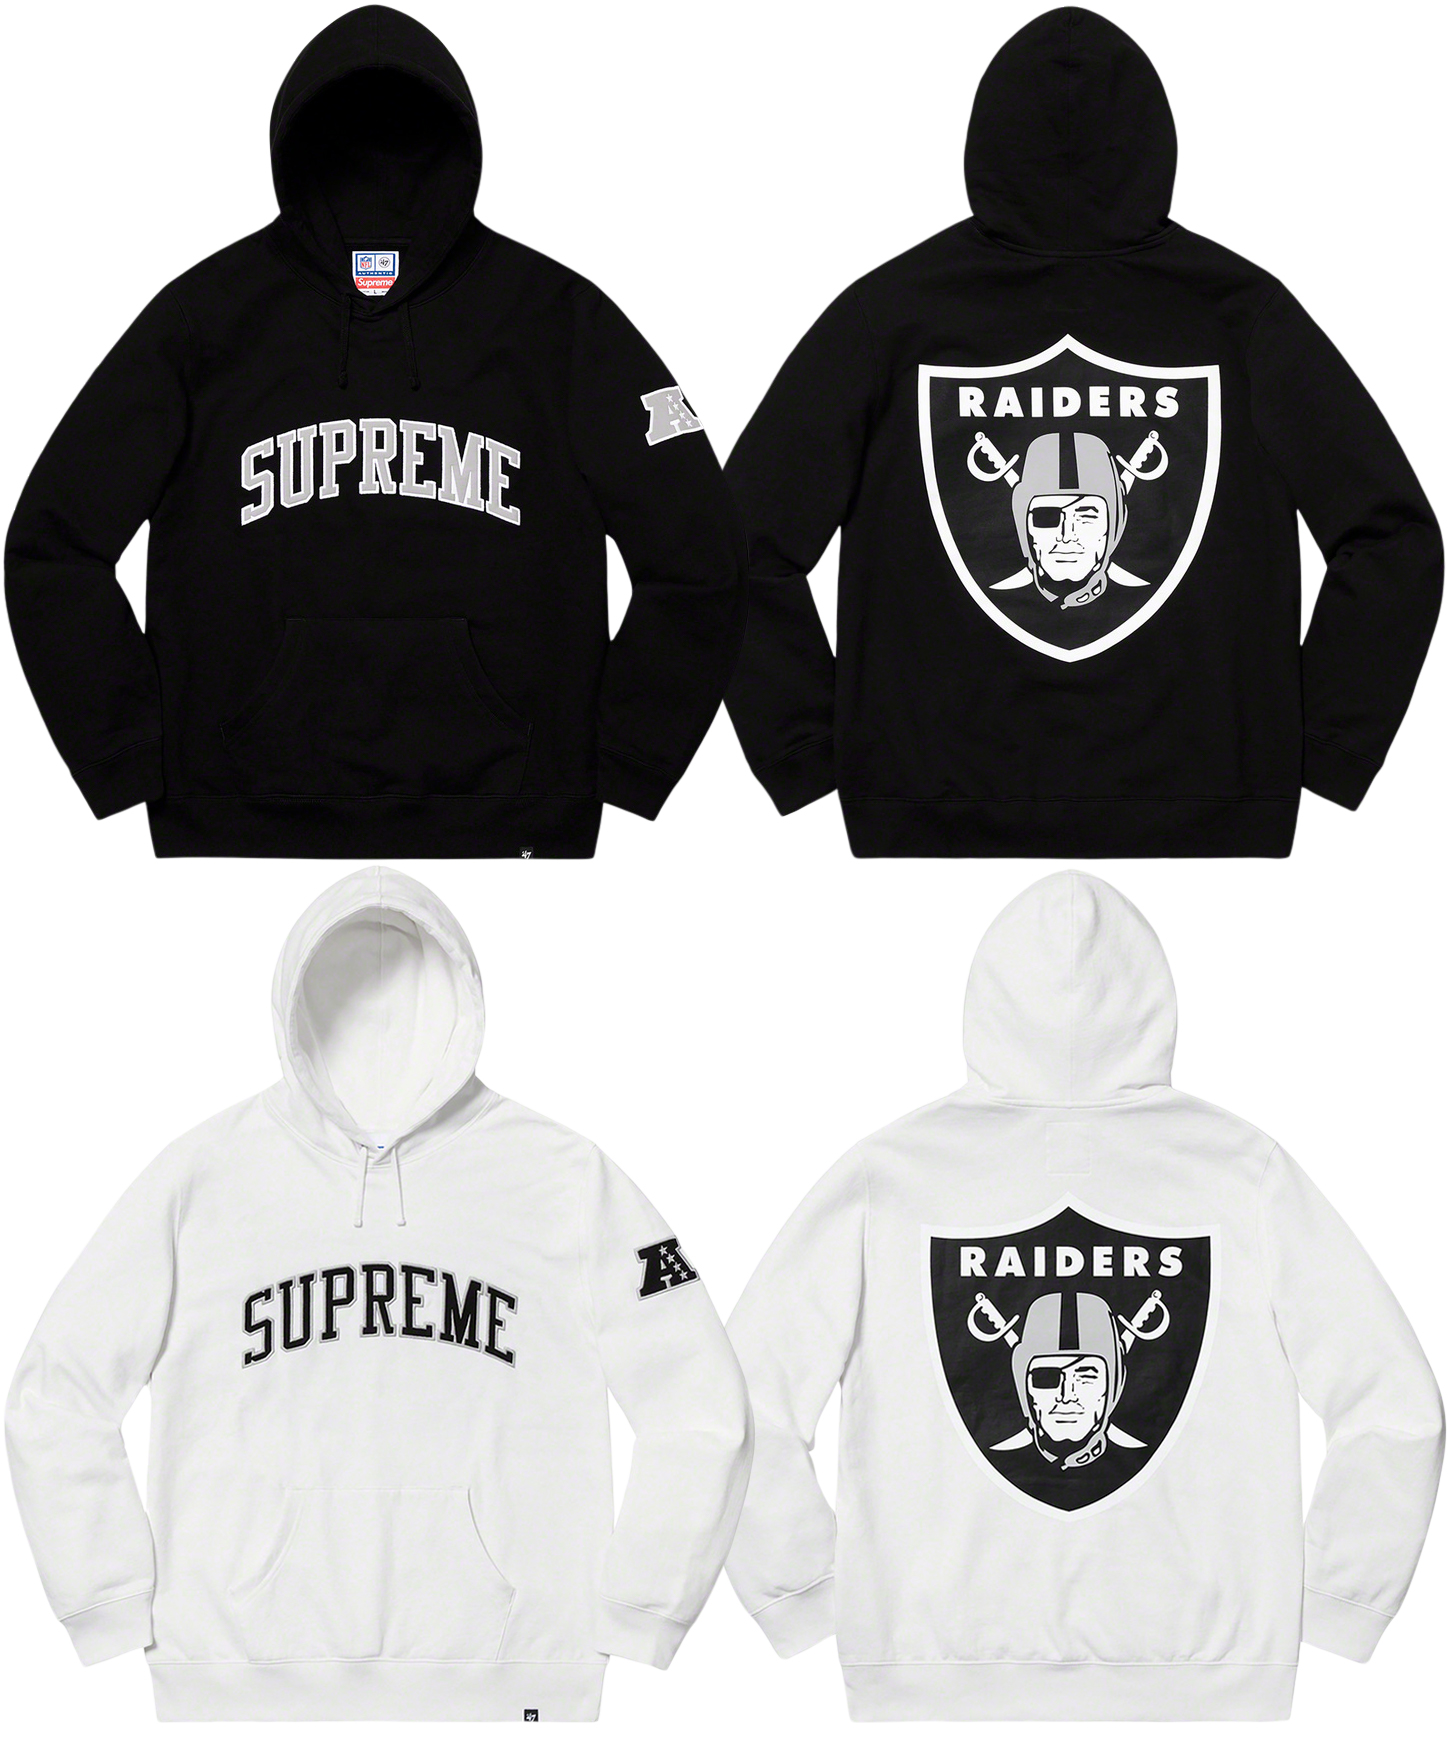 Supreme SS19 x NFL Raiders 47 Hooded Sweatshirt SUP-SS19-10301